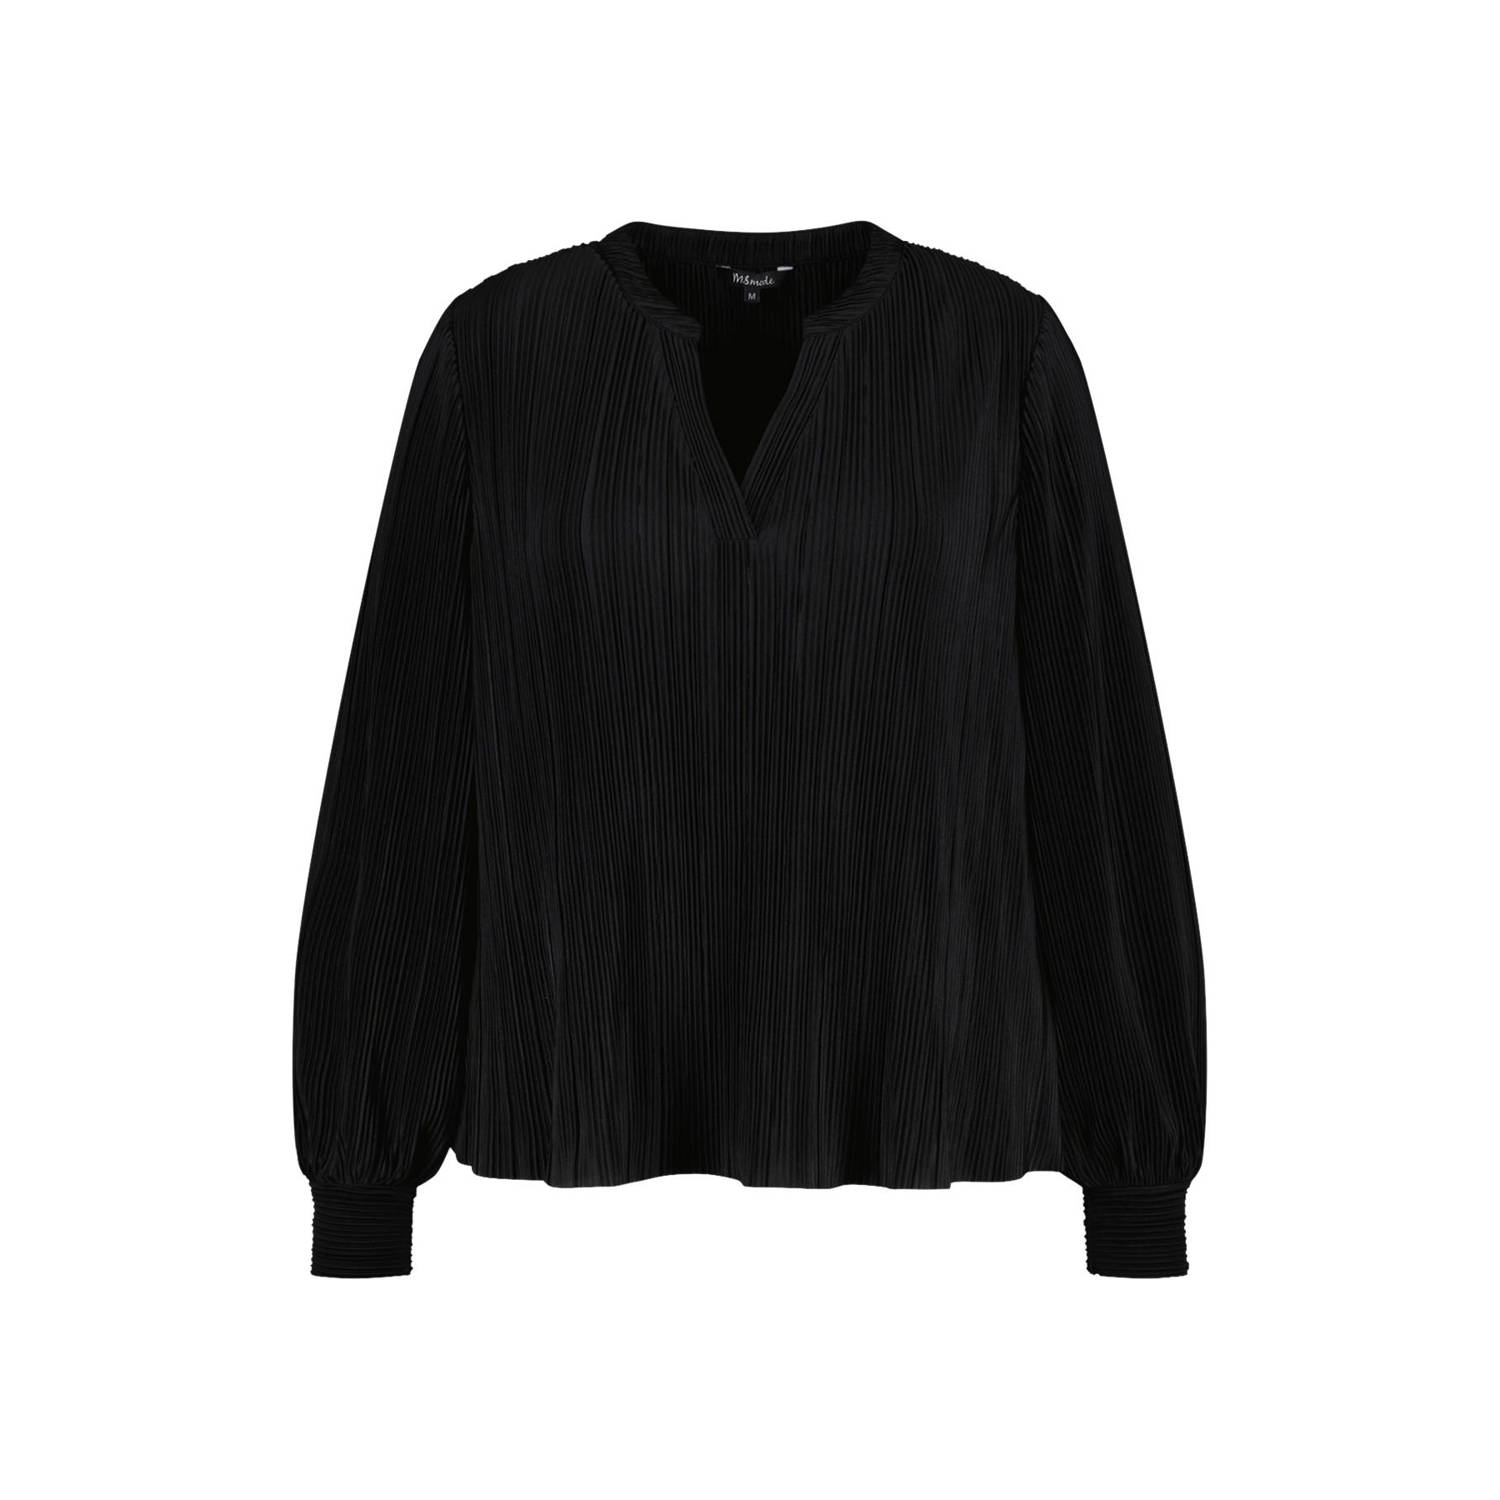 MS Mode blousetop zwart